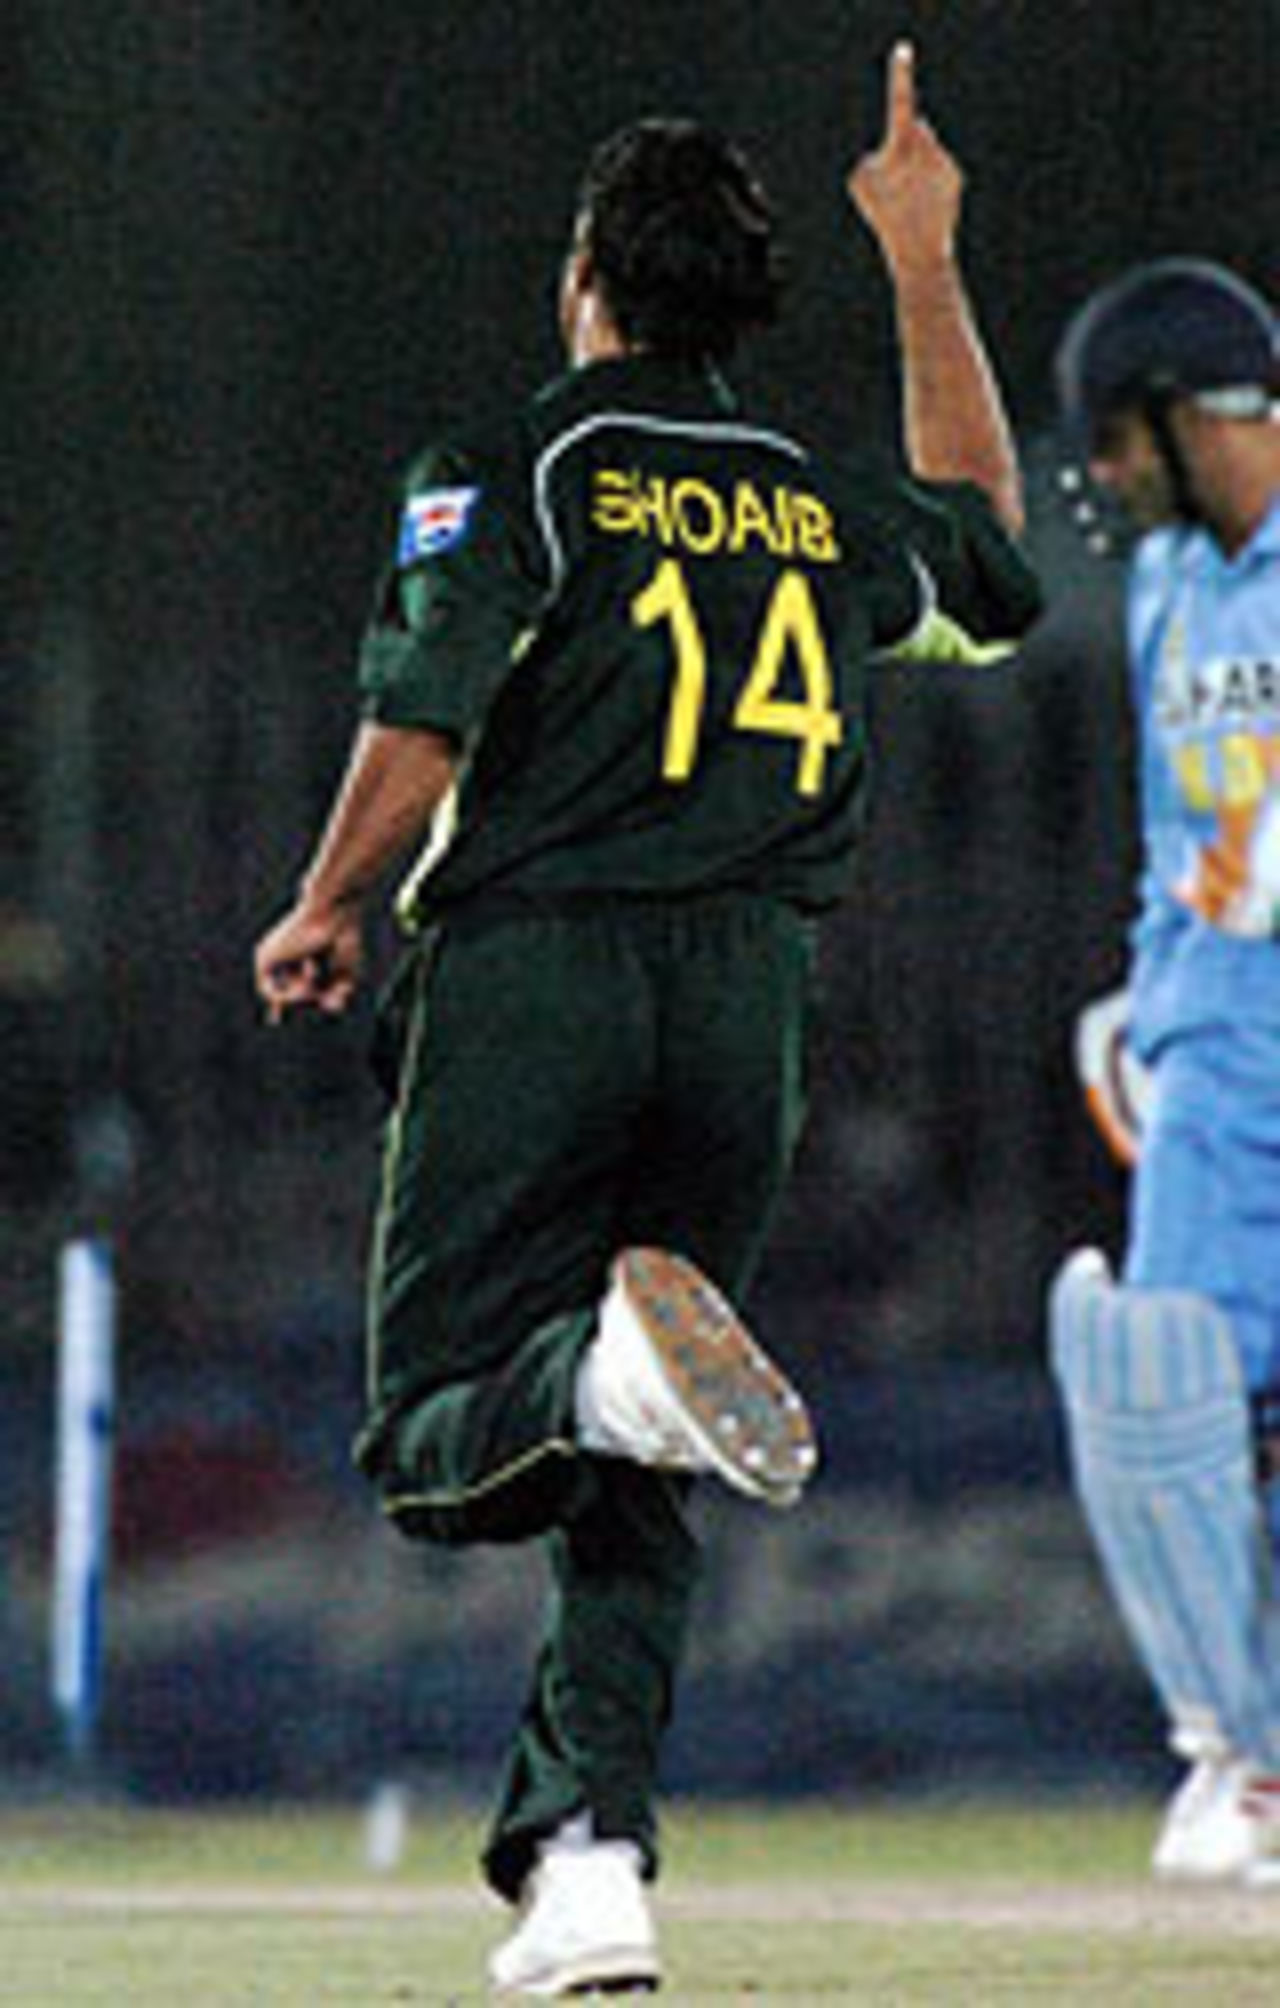 Shoaib Akhtar gets rid of Virender Sehwag, Pakistan v India, 2nd ODI, Rawalpindi, March 16, 2004